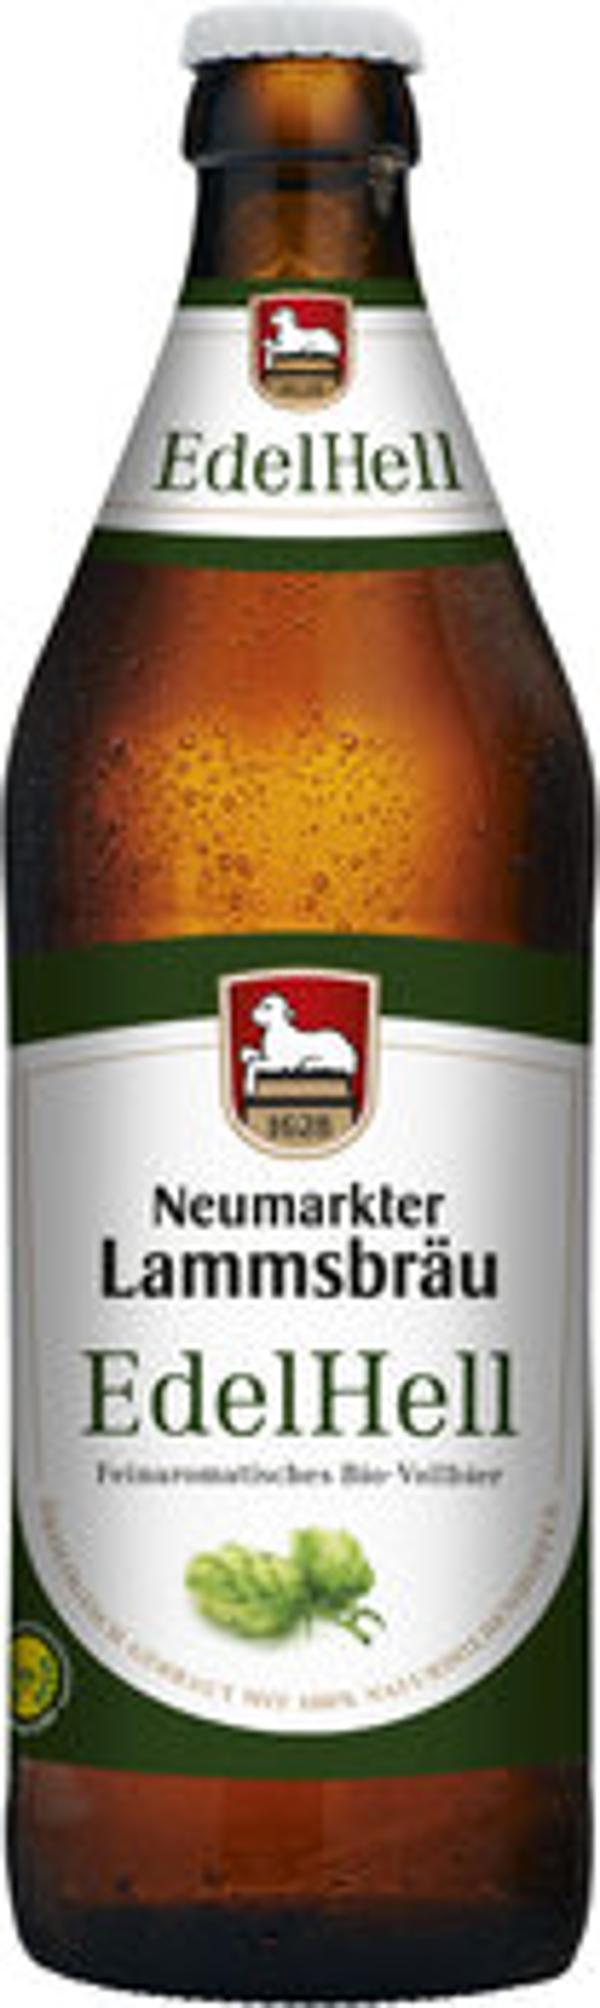 Produktfoto zu Lammsbräu EdelHell feinaromatisiertes Vollbier 0,5l